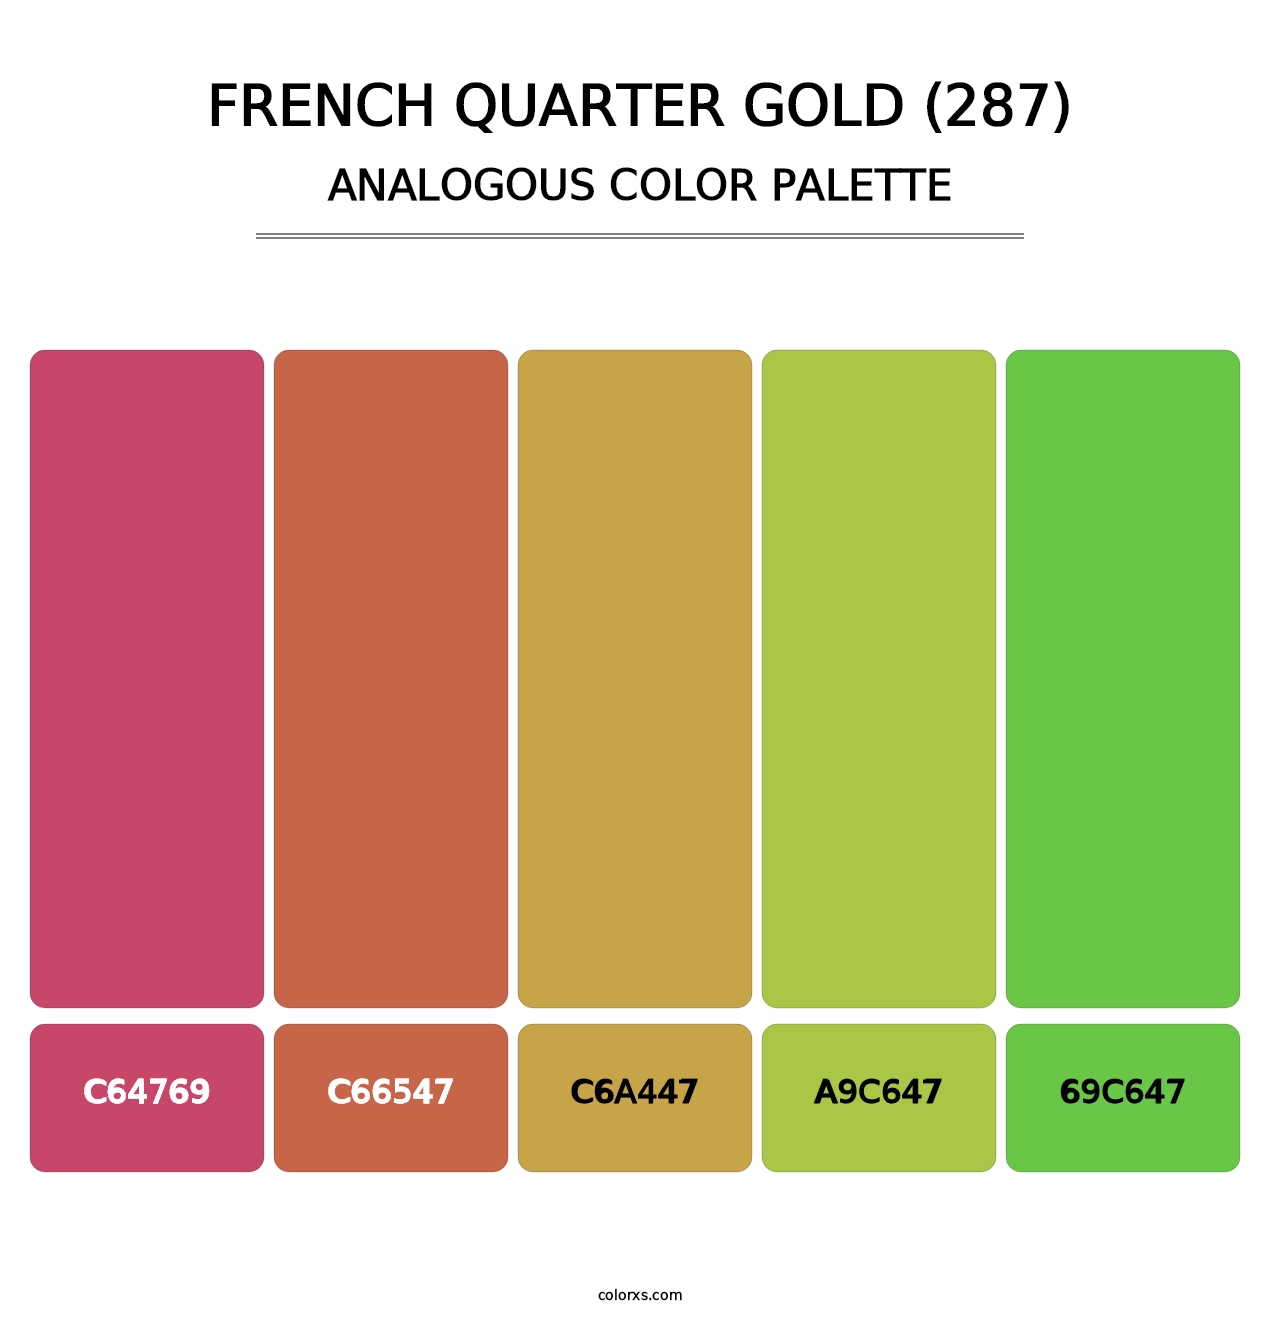 French Quarter Gold (287) - Analogous Color Palette